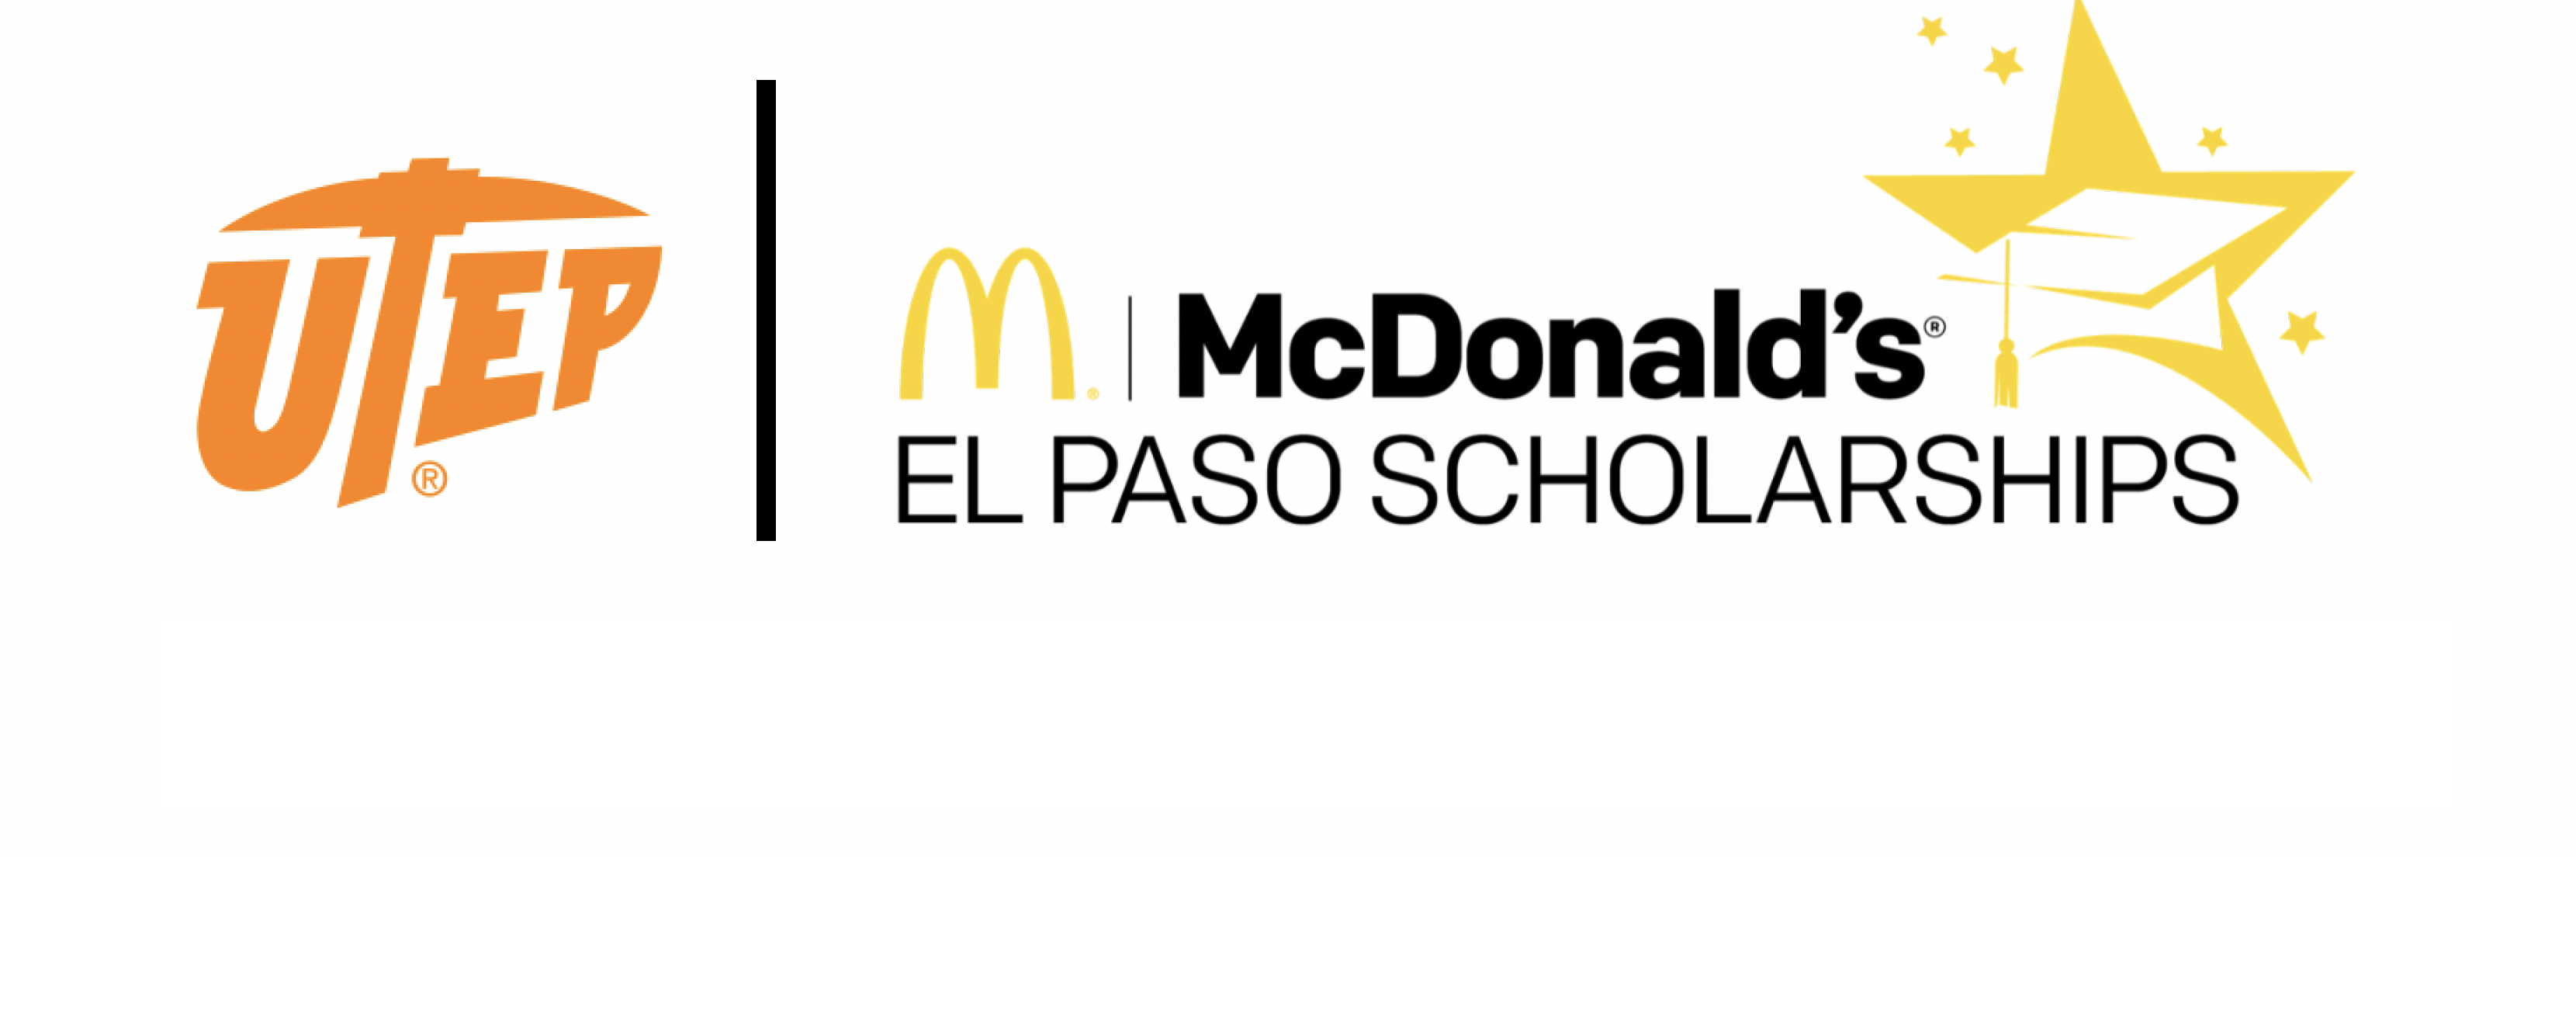 McDonald's El Paso Scholarship 